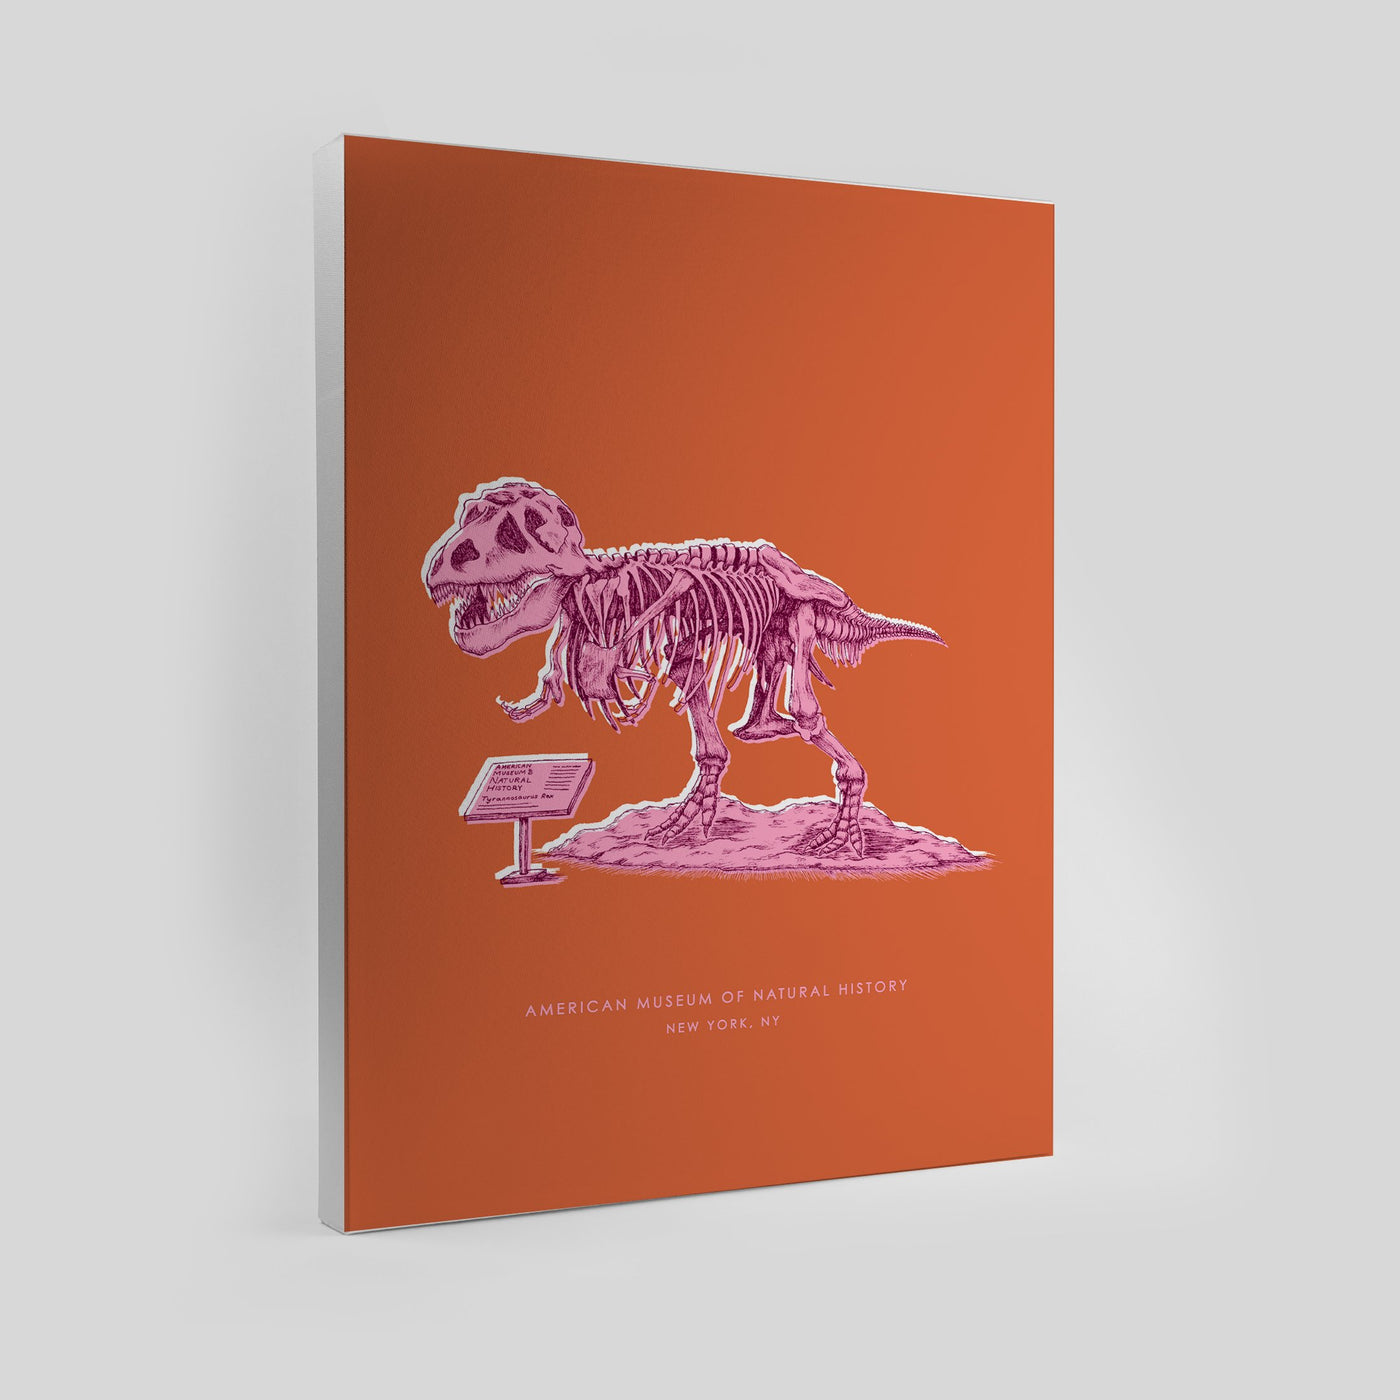 Gallery Prints Orange Canvas / 8x10 / Unframed New York Dinosaur Print Katie Kime